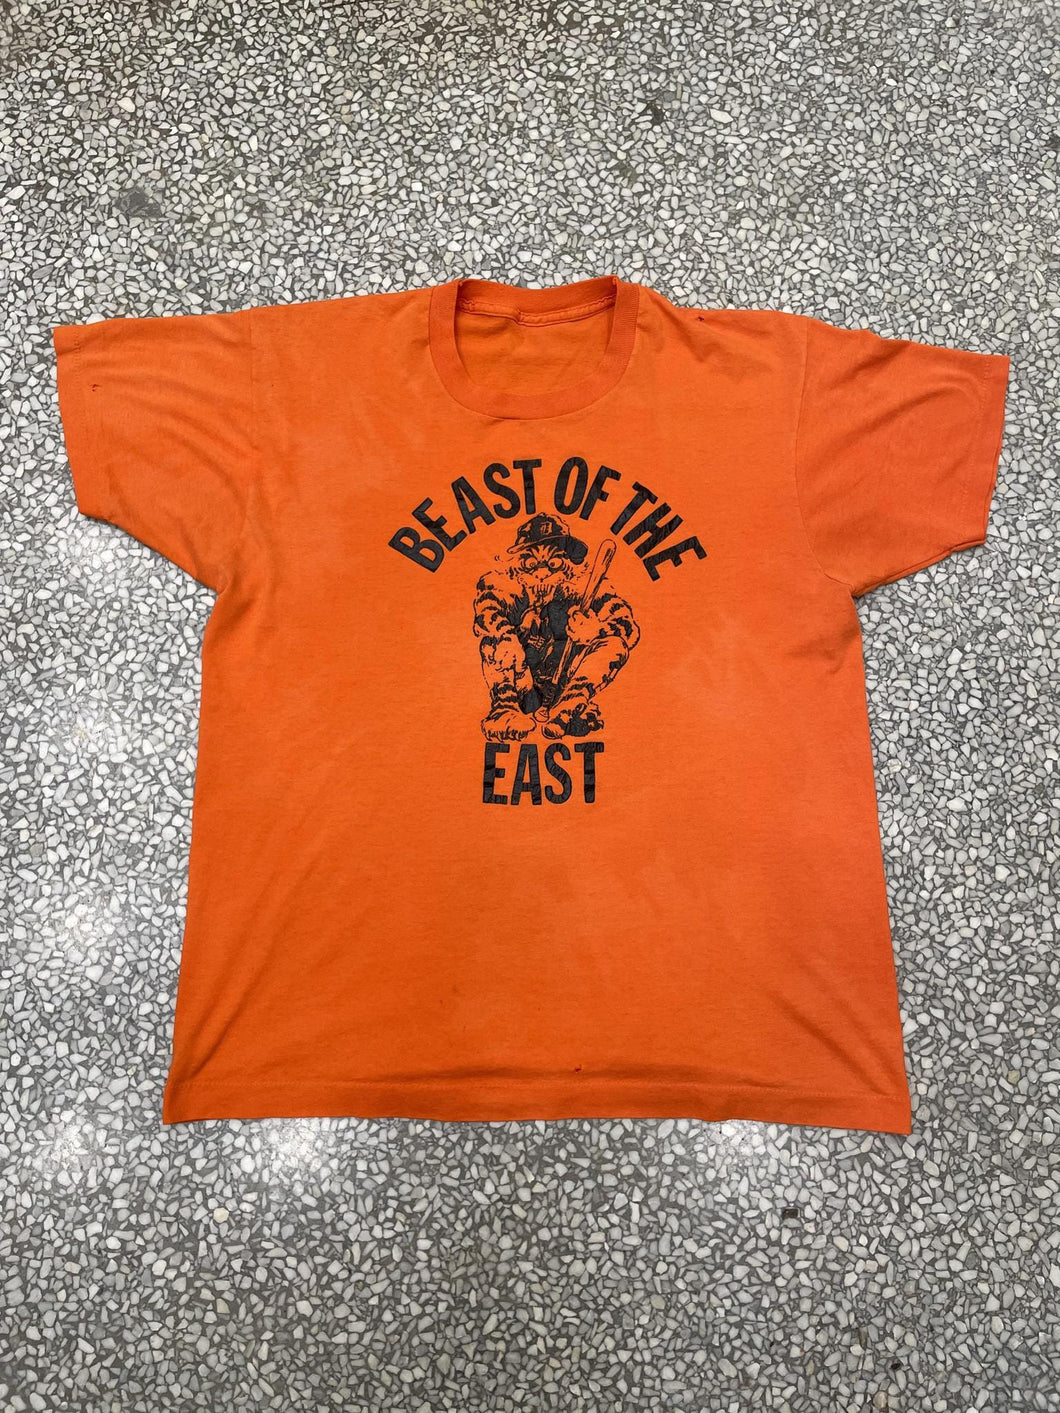 Detroit Tigers Vintage 90s Beast of The East Paper Thin Orange ABC Vintage 